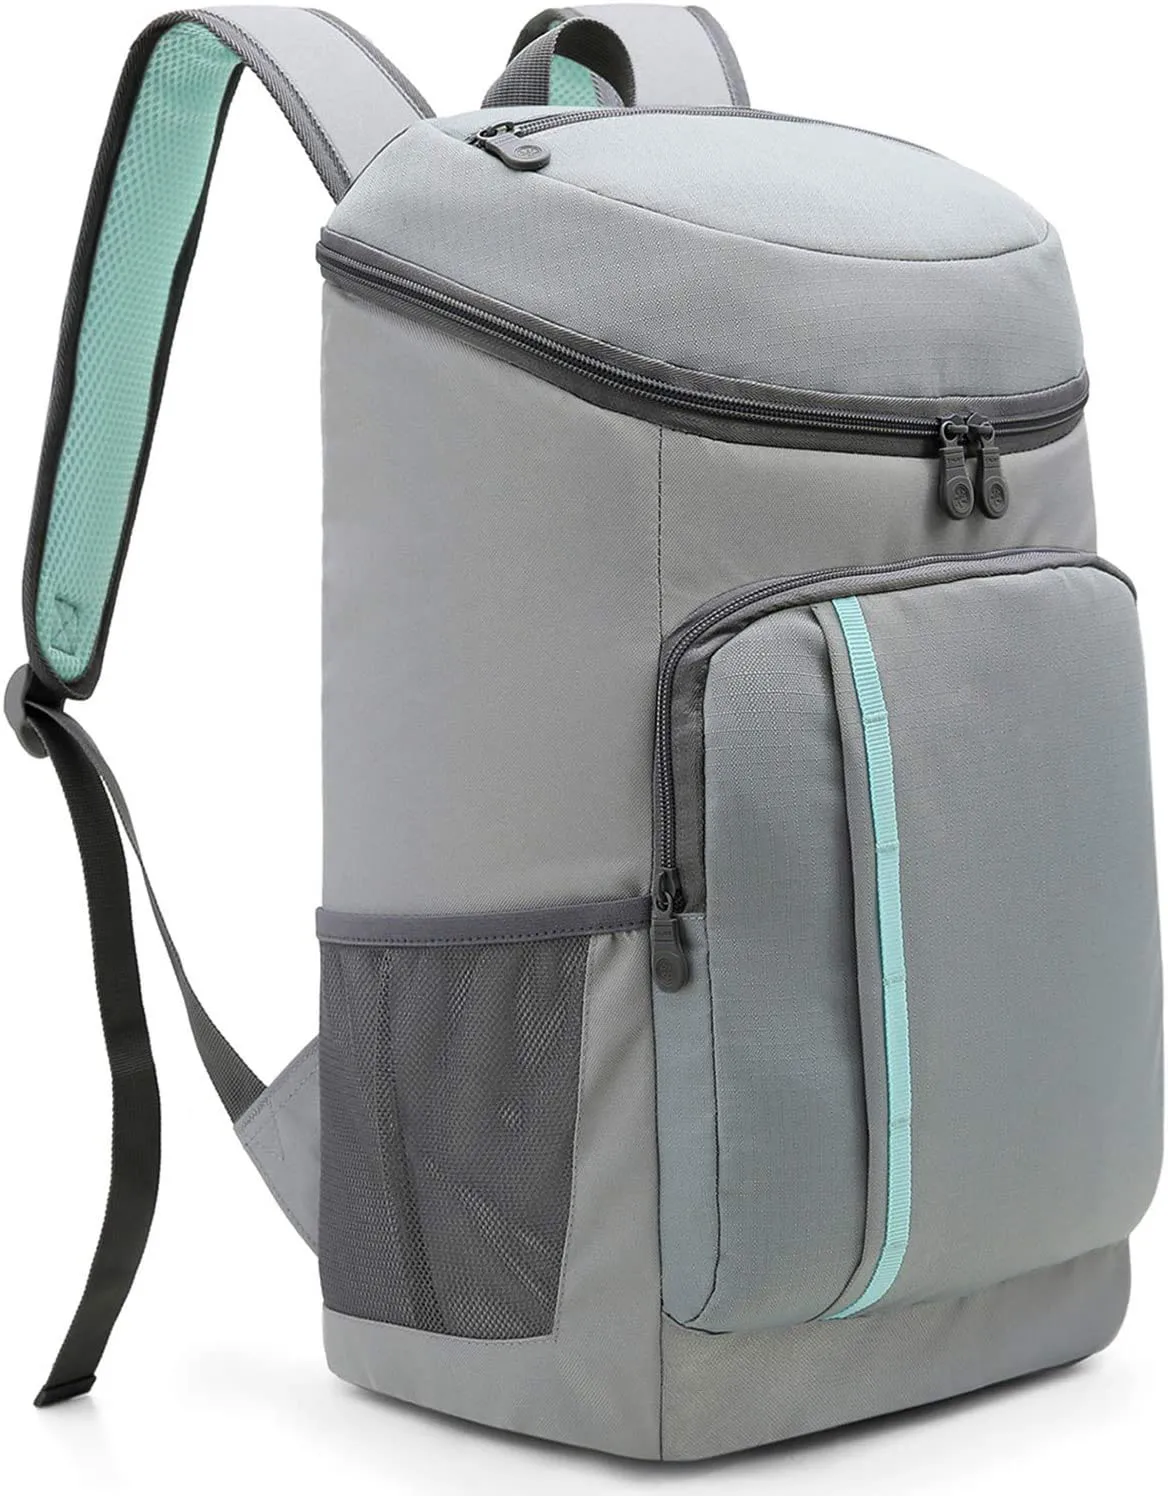 Cooler Backpack 30 Cans Lightweight Insulated Backpack Cooler